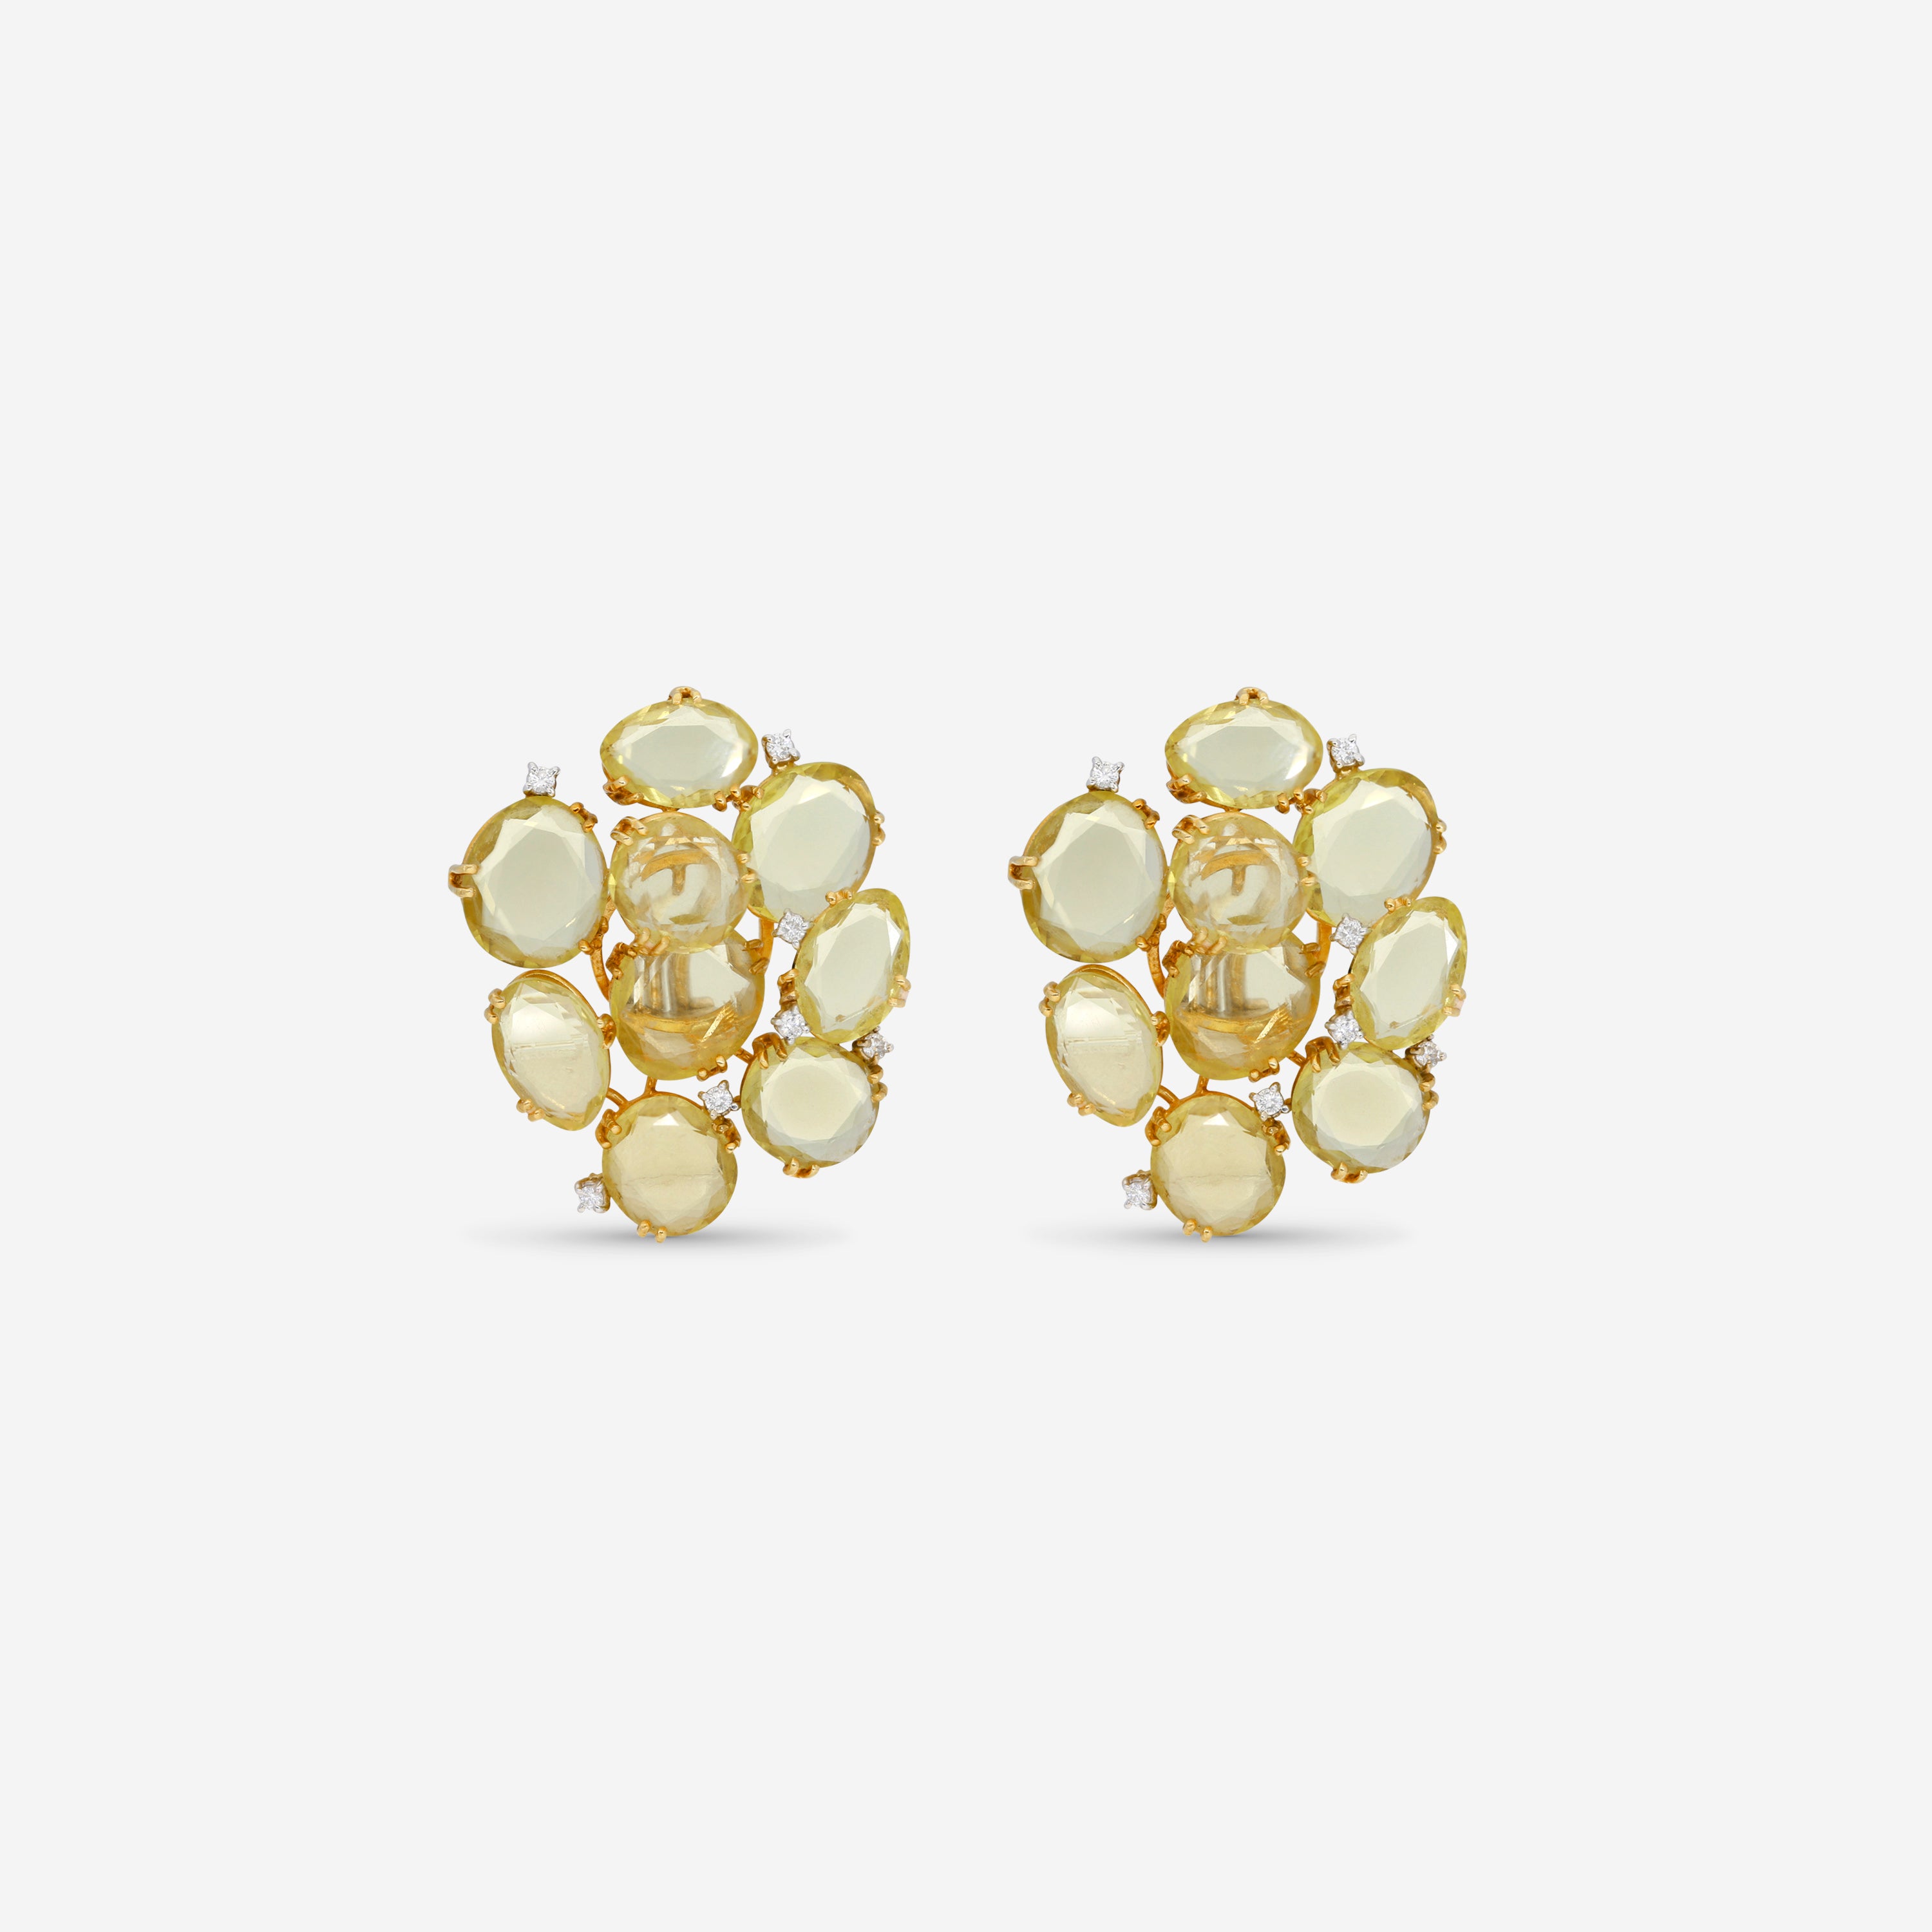 Casato 18K Yellow Gold, Quartz and Diamond French Clip Earrings 1191070 - THE SOLIST